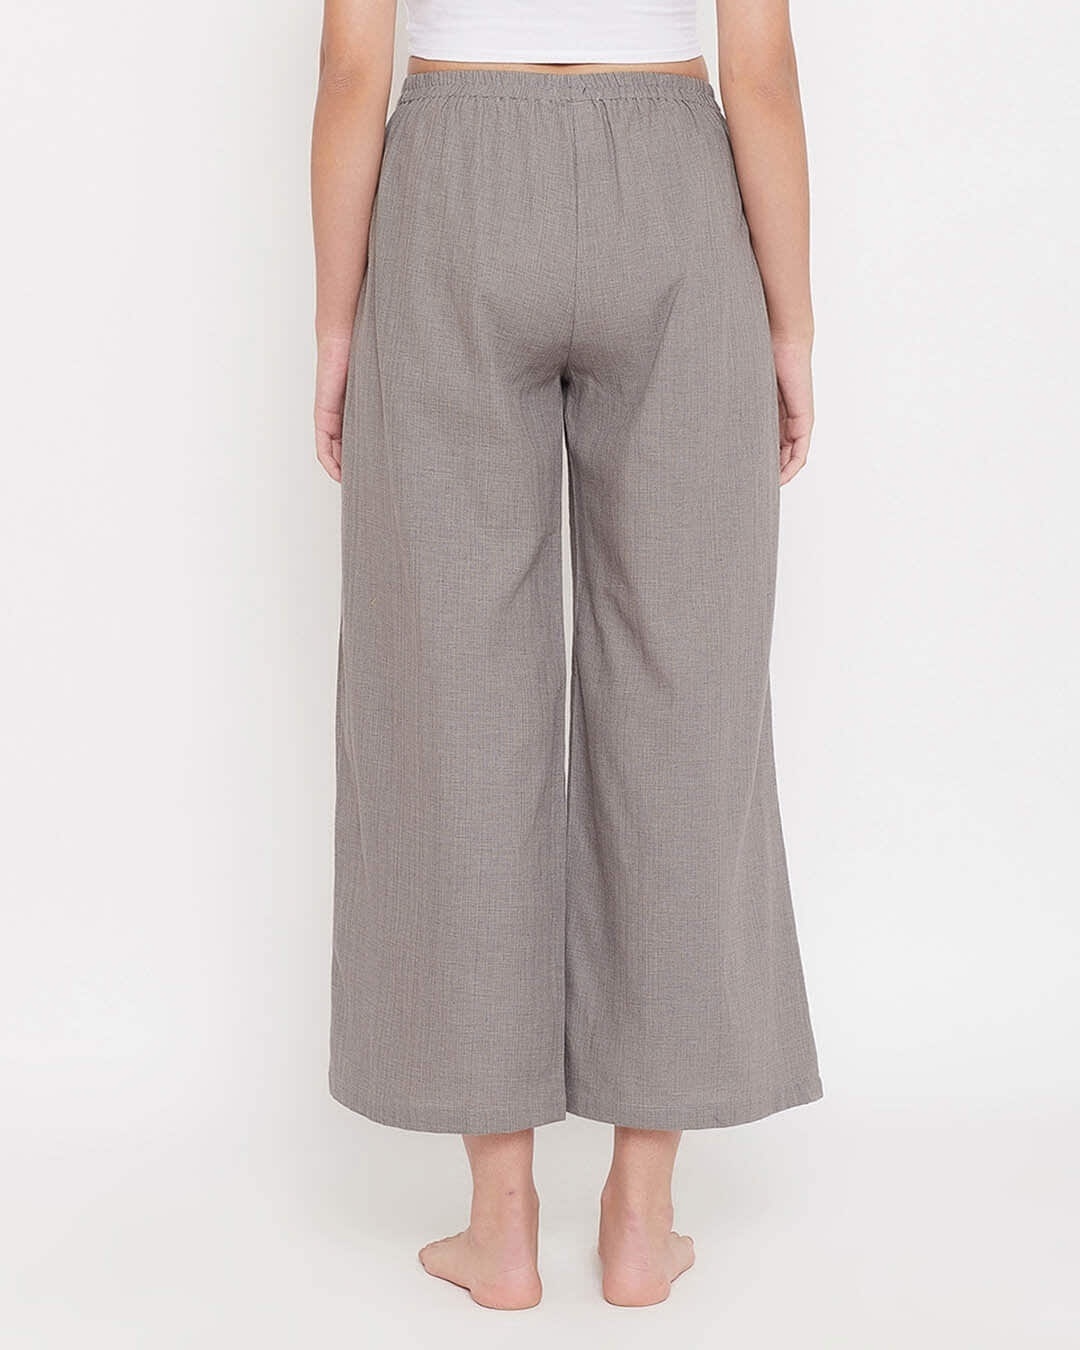 Shop Chic Basic Flared Pyjama In Grey   100 Cotton-Back